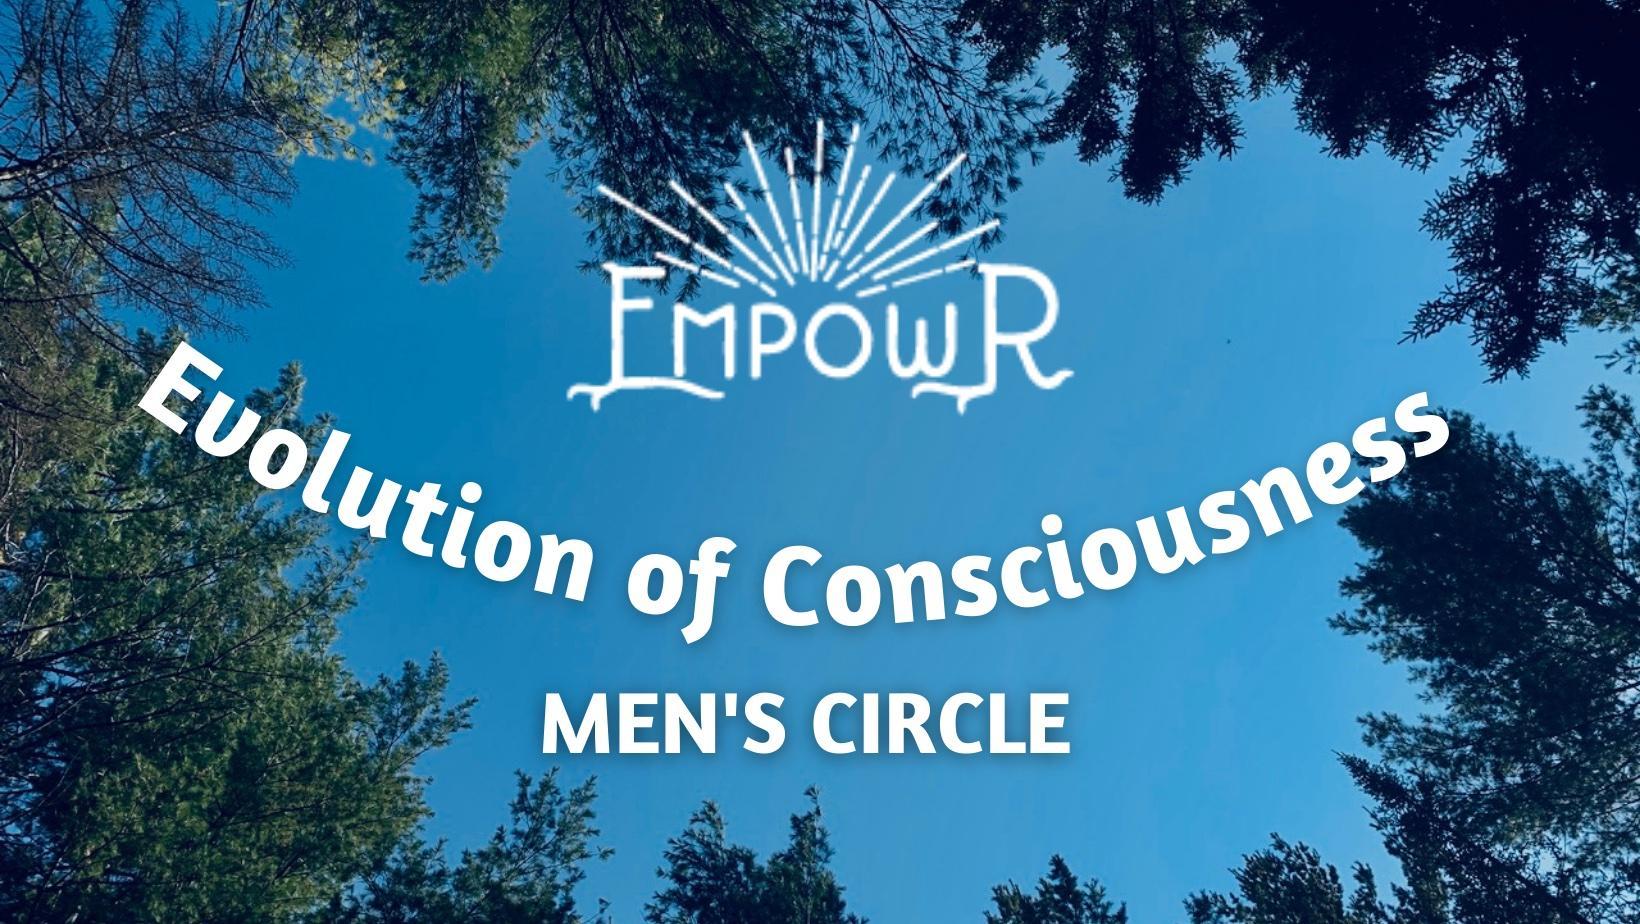 Evolution of Consciousness Men's Circle